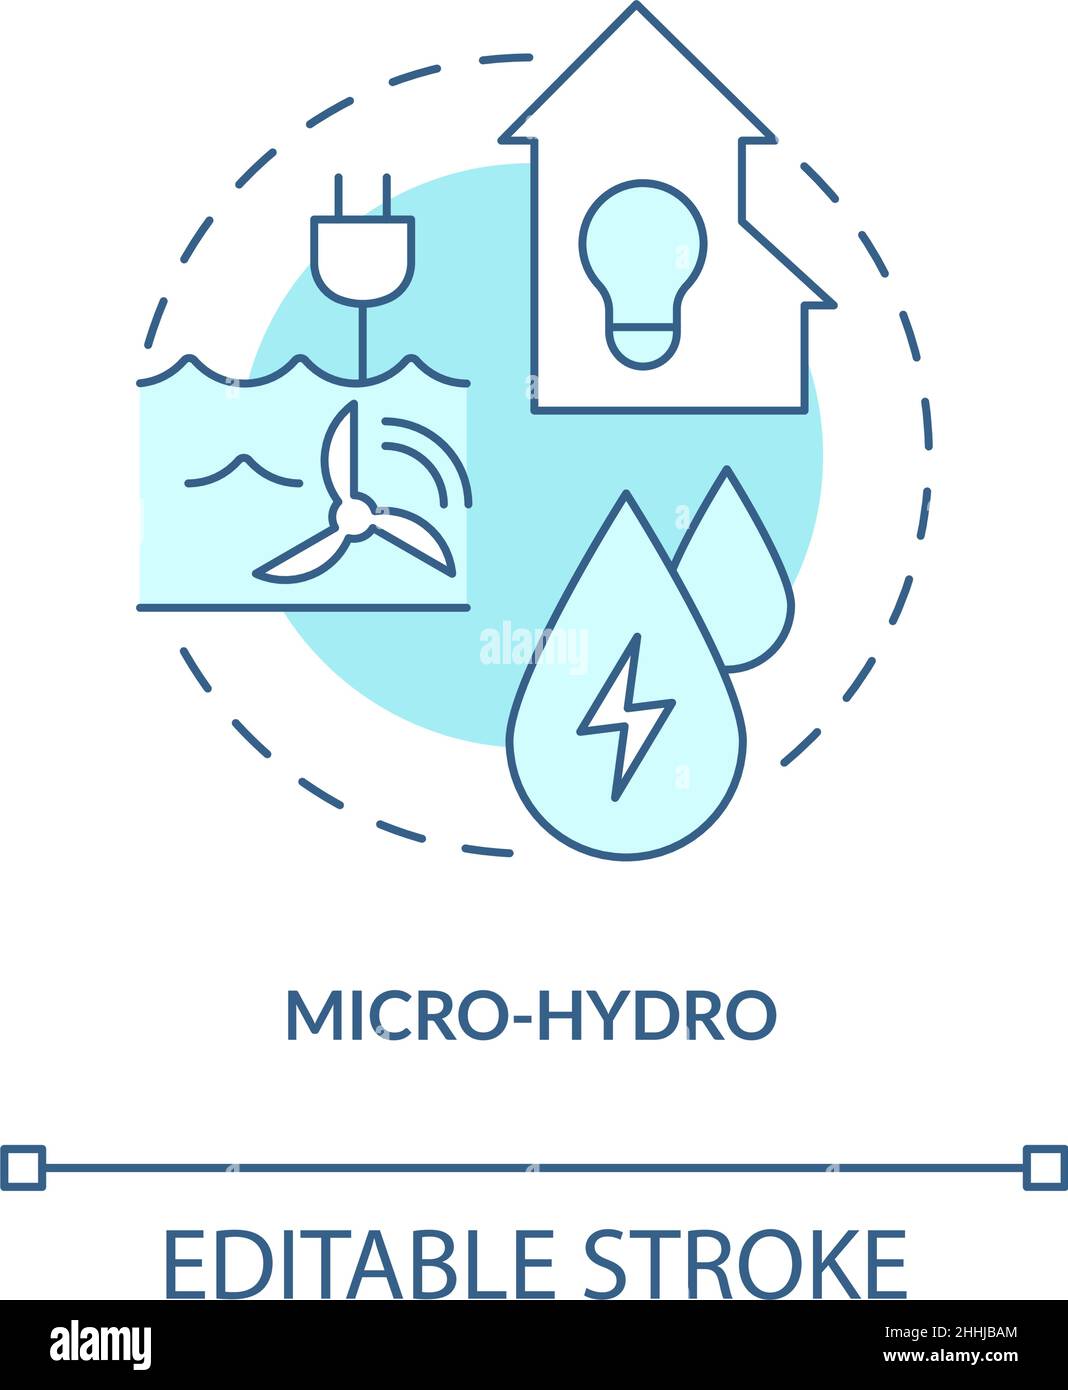 Micro hydro turquoise concept icon Stock Vector